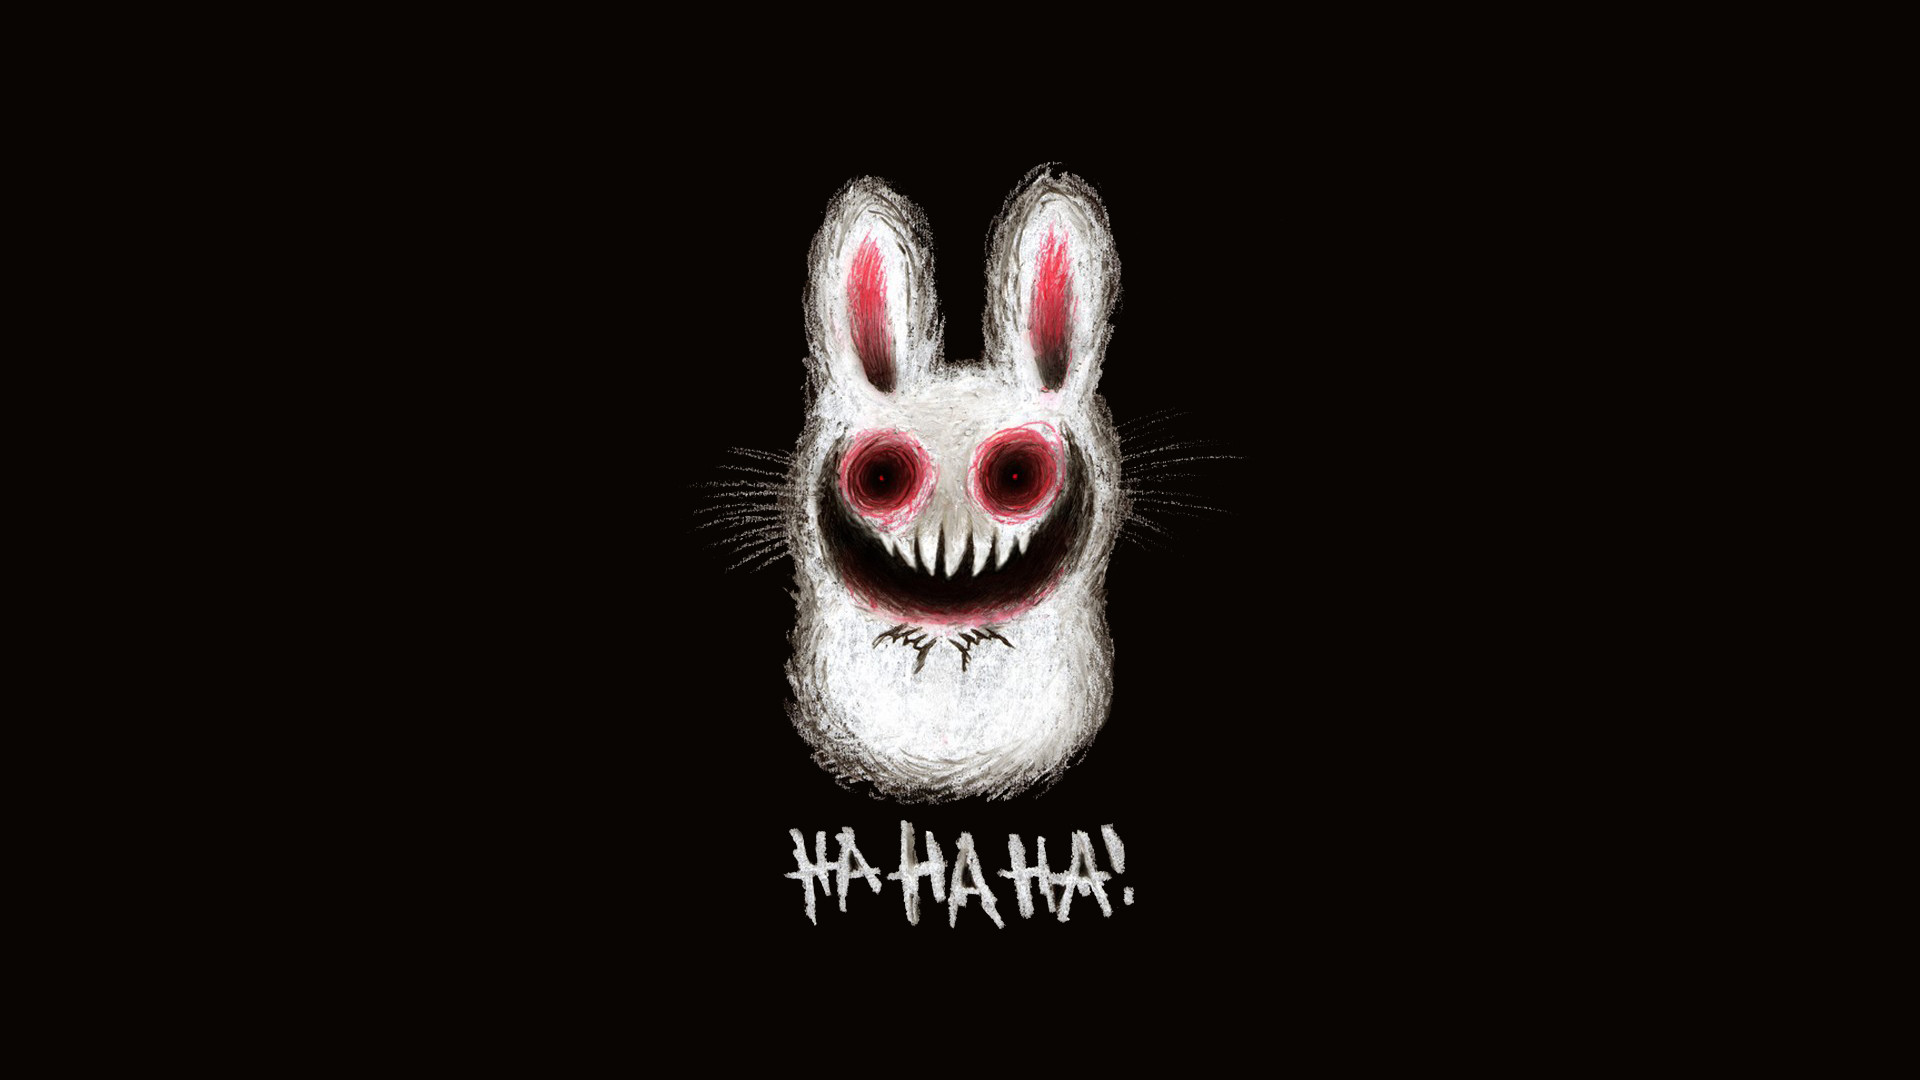 1920x1080 ... Creepy bunny wallpaper cute adorable fluffy scary bunny rabbit